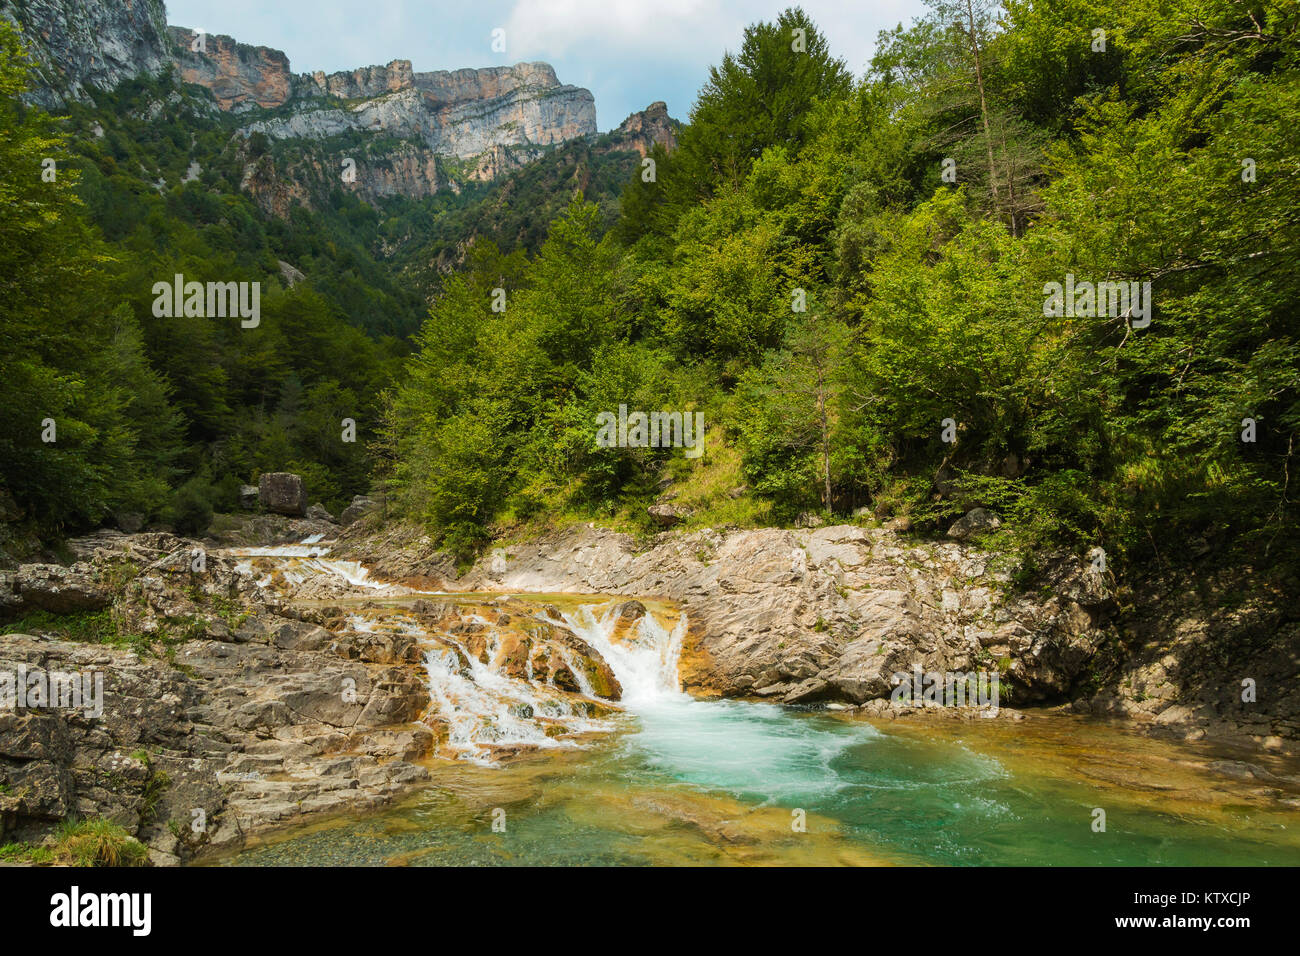 Waterfall on Rio Bellos river in the limestone Anisclo Canyon, Ordesa National Park, Anisclo, Pyrenees, Aragon, Spain, Europe Stock Photo